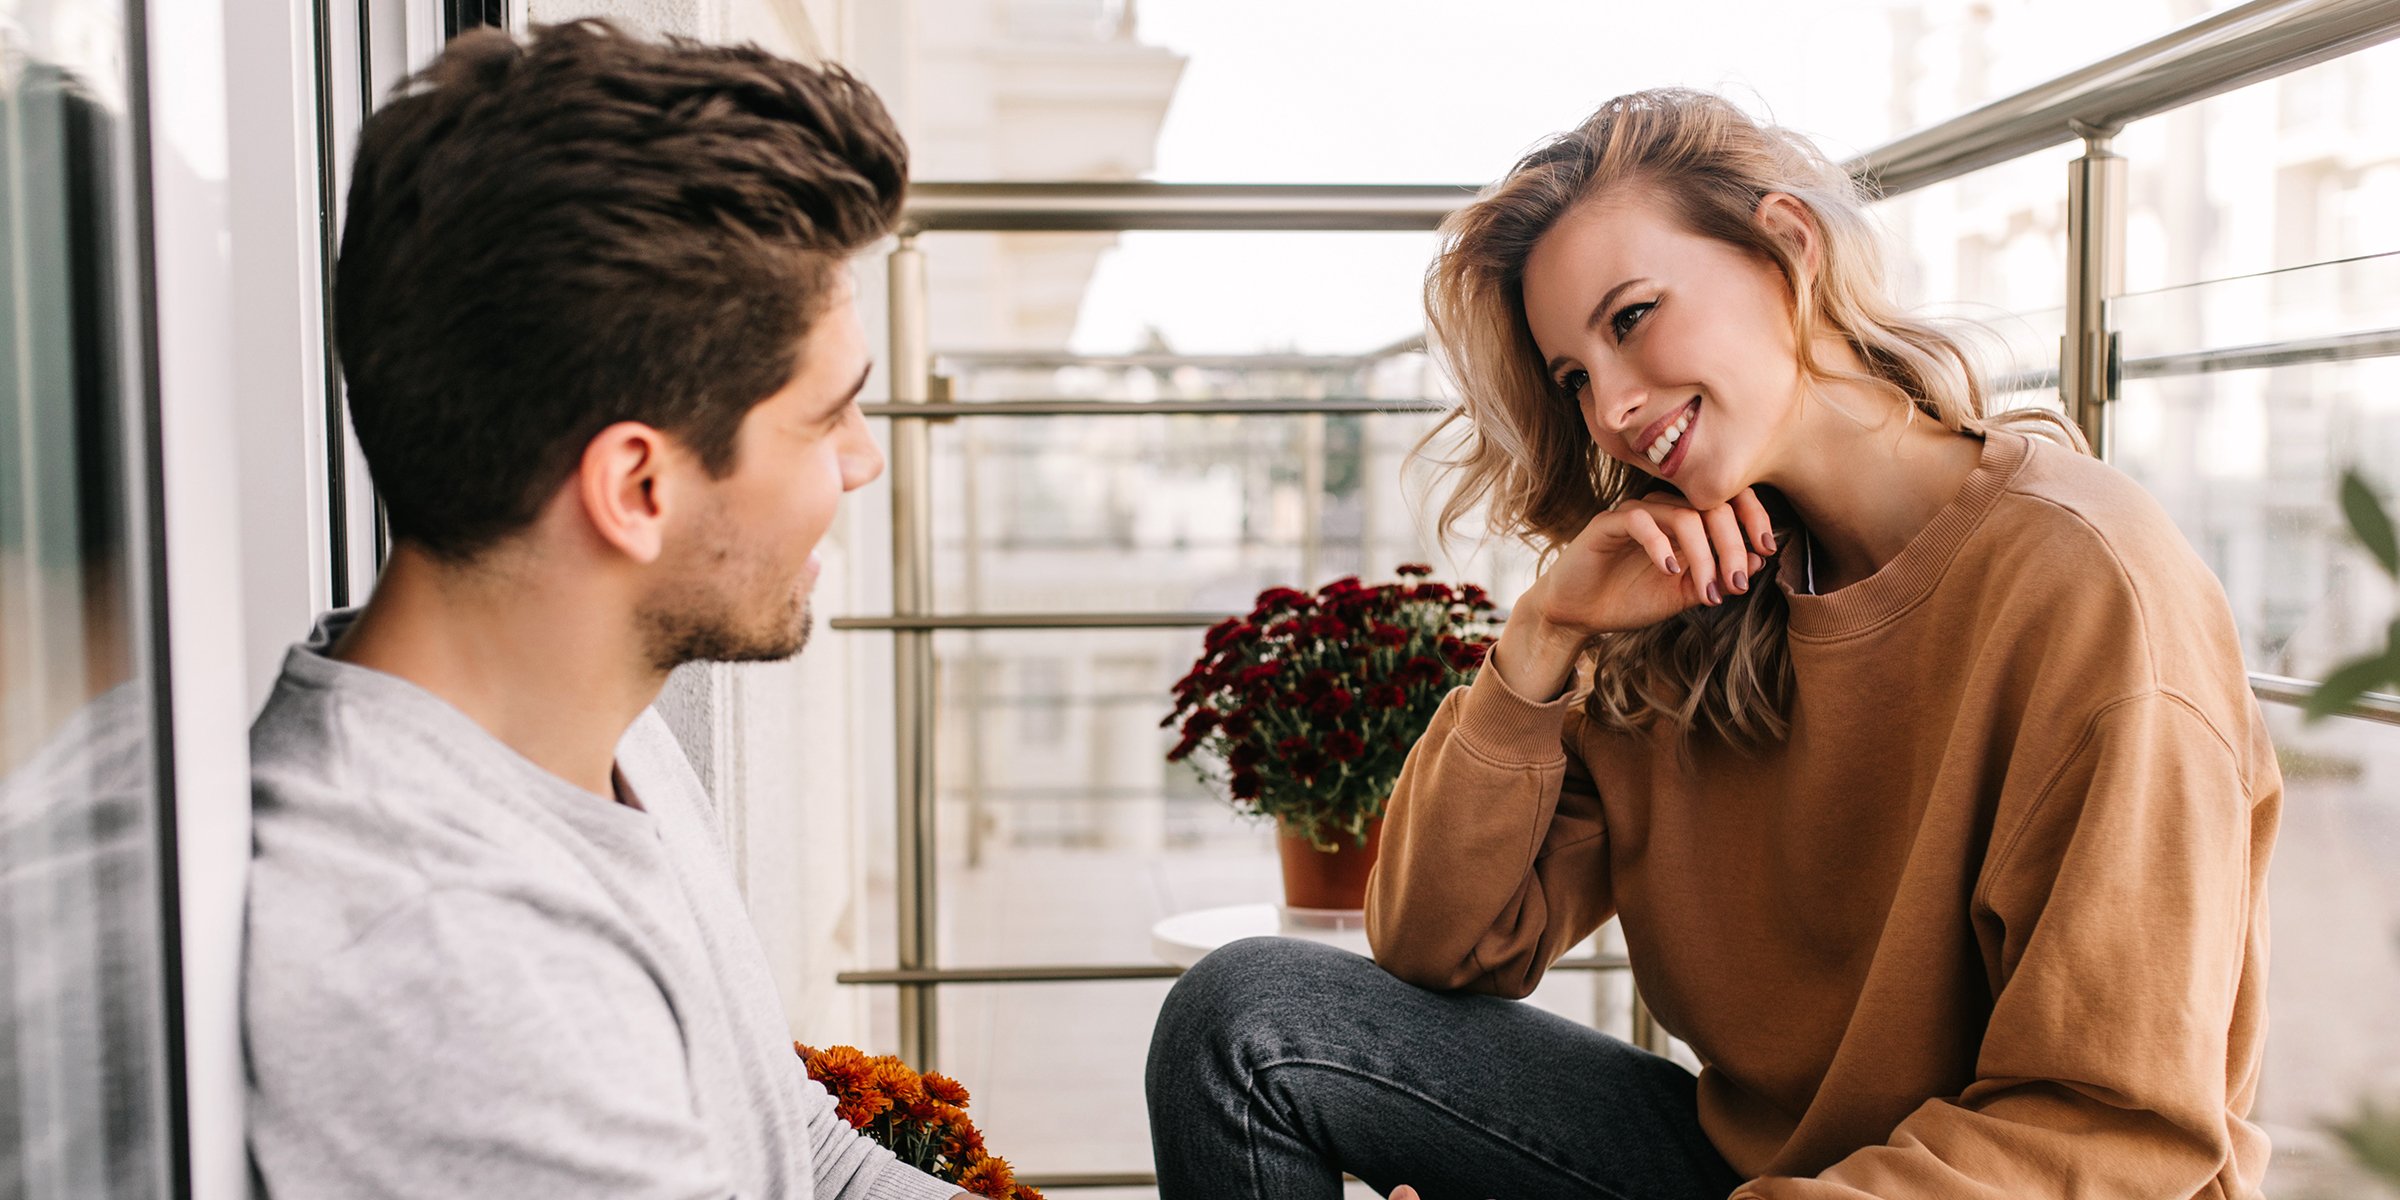 A man and woman having a conversation | Source: Shutterstock